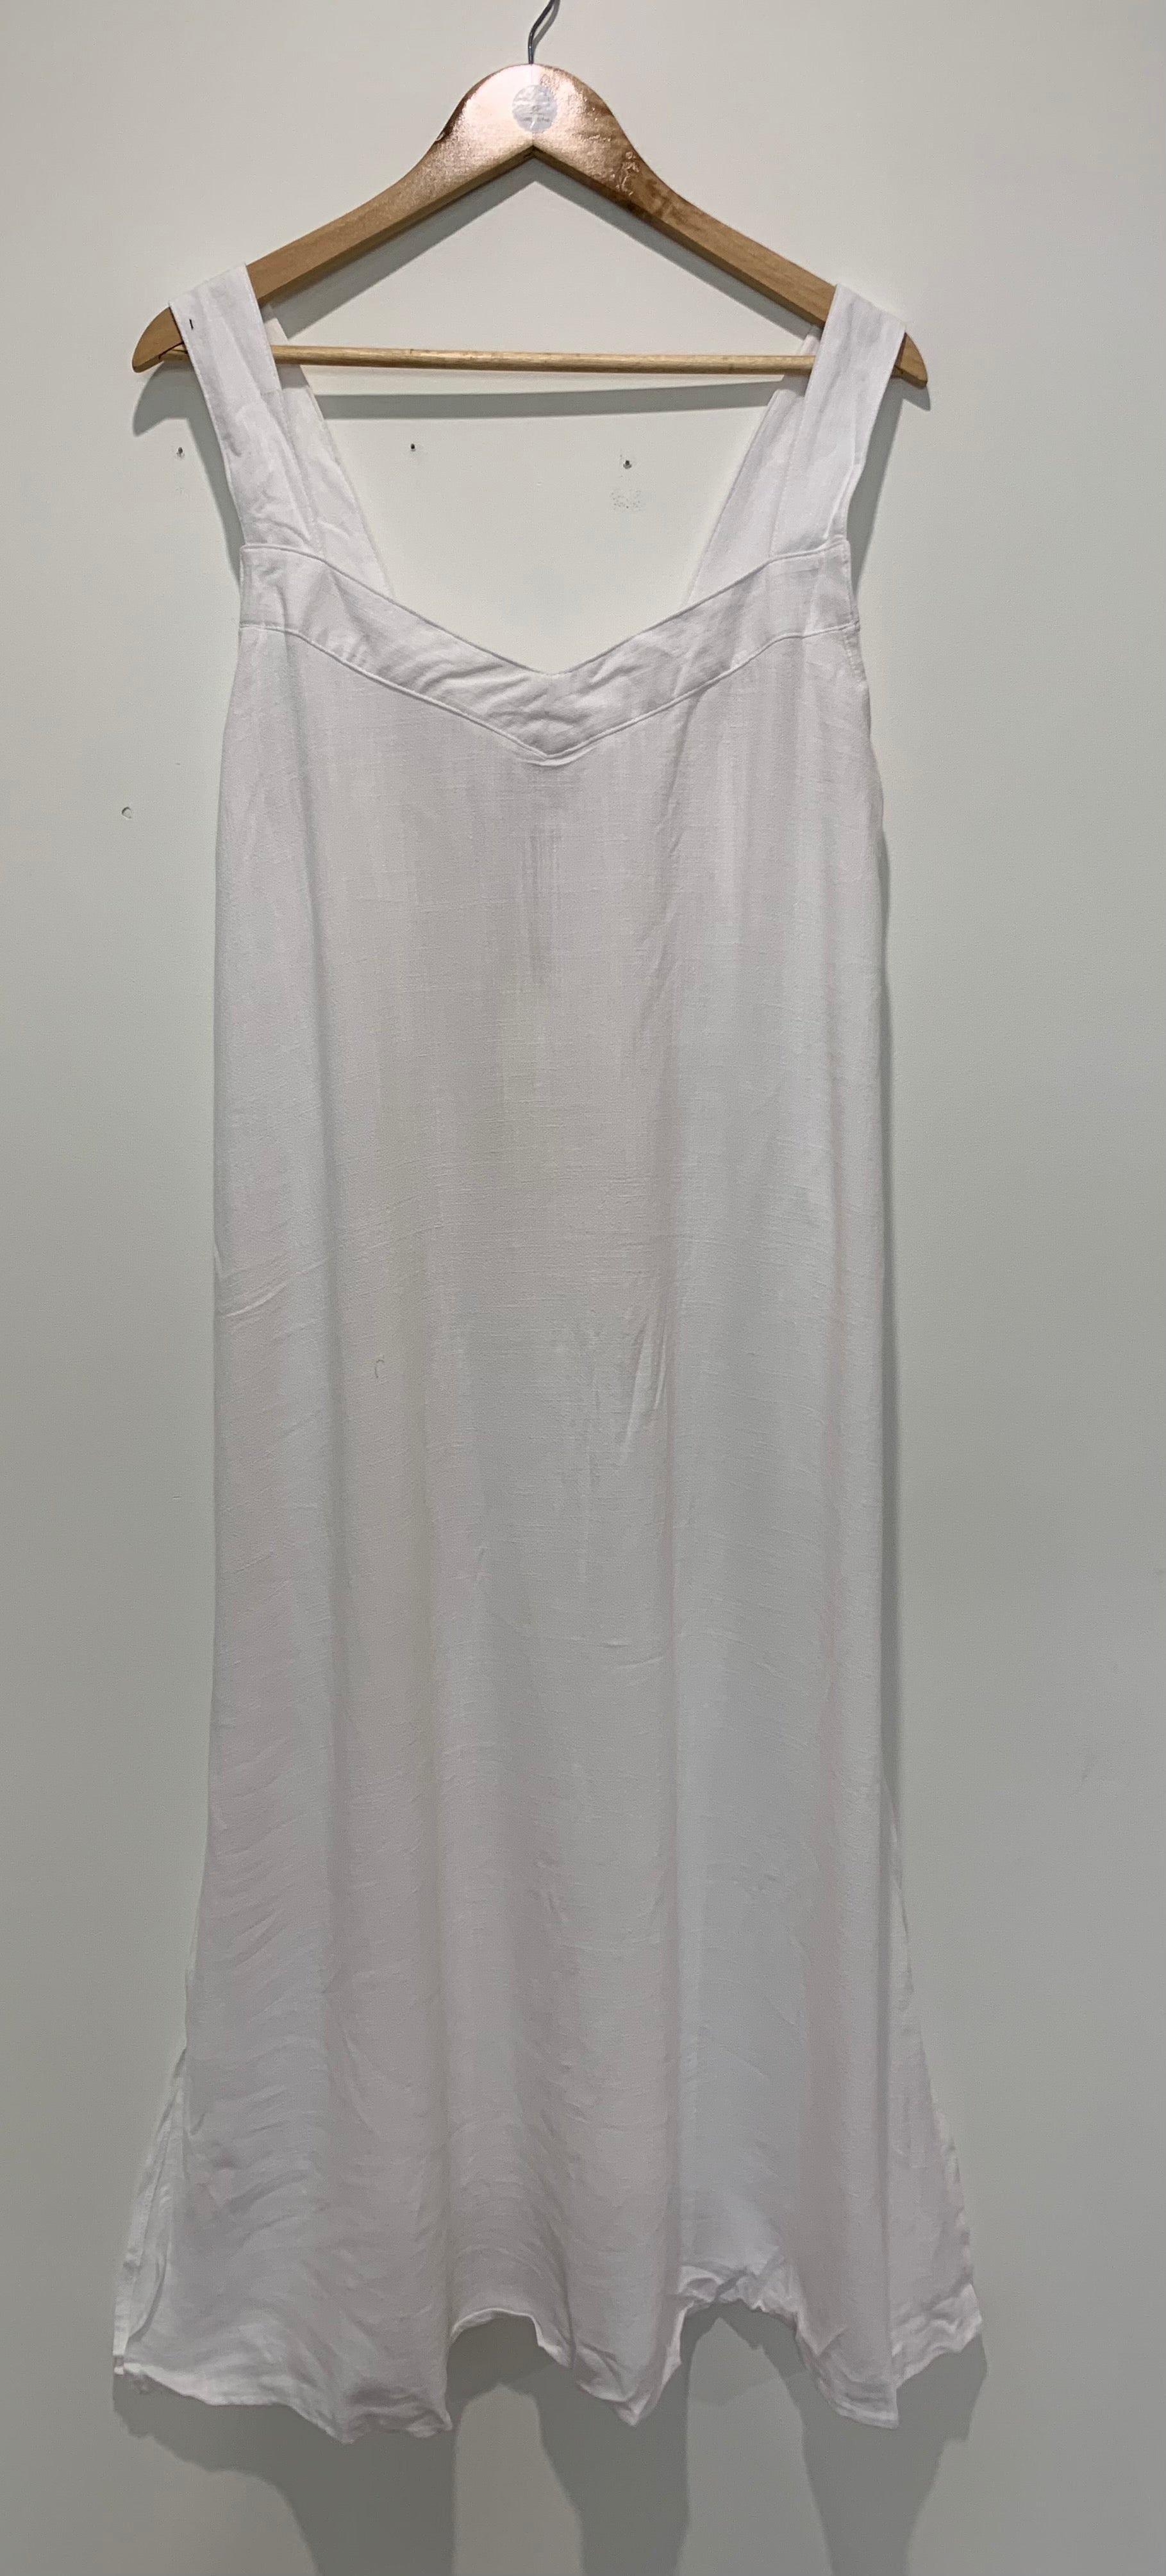 Singlet Style Maxi Dress in Crips White Linen Blend Resort/Beach Wear - Willow Tree